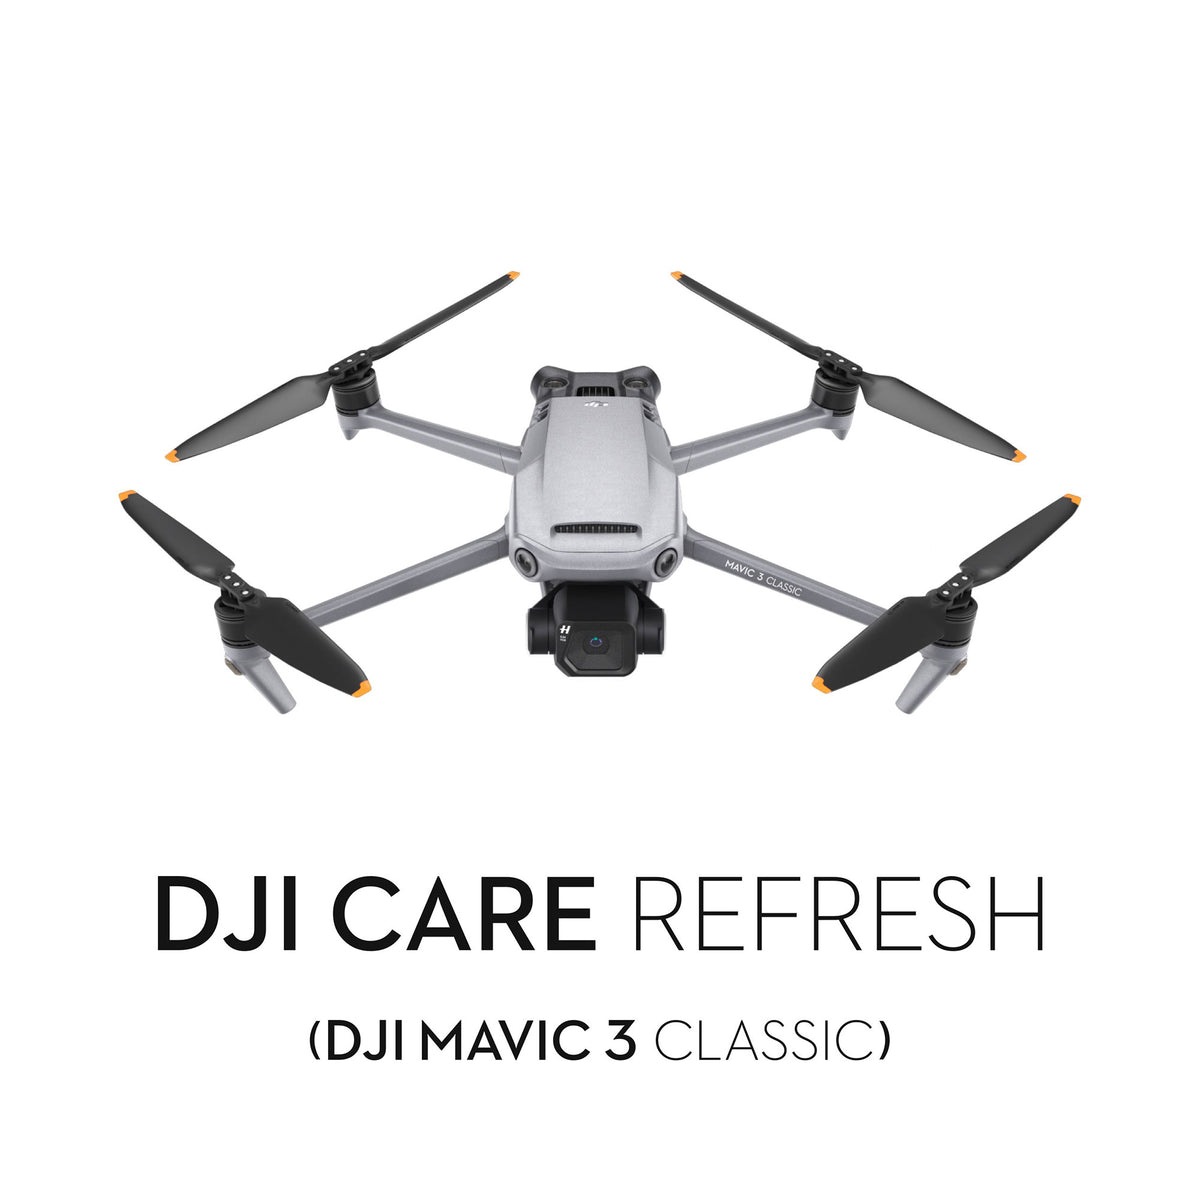 DJI Care Refresh 2年版(DJI Mavic 3 Classic)カード - 業務用撮影